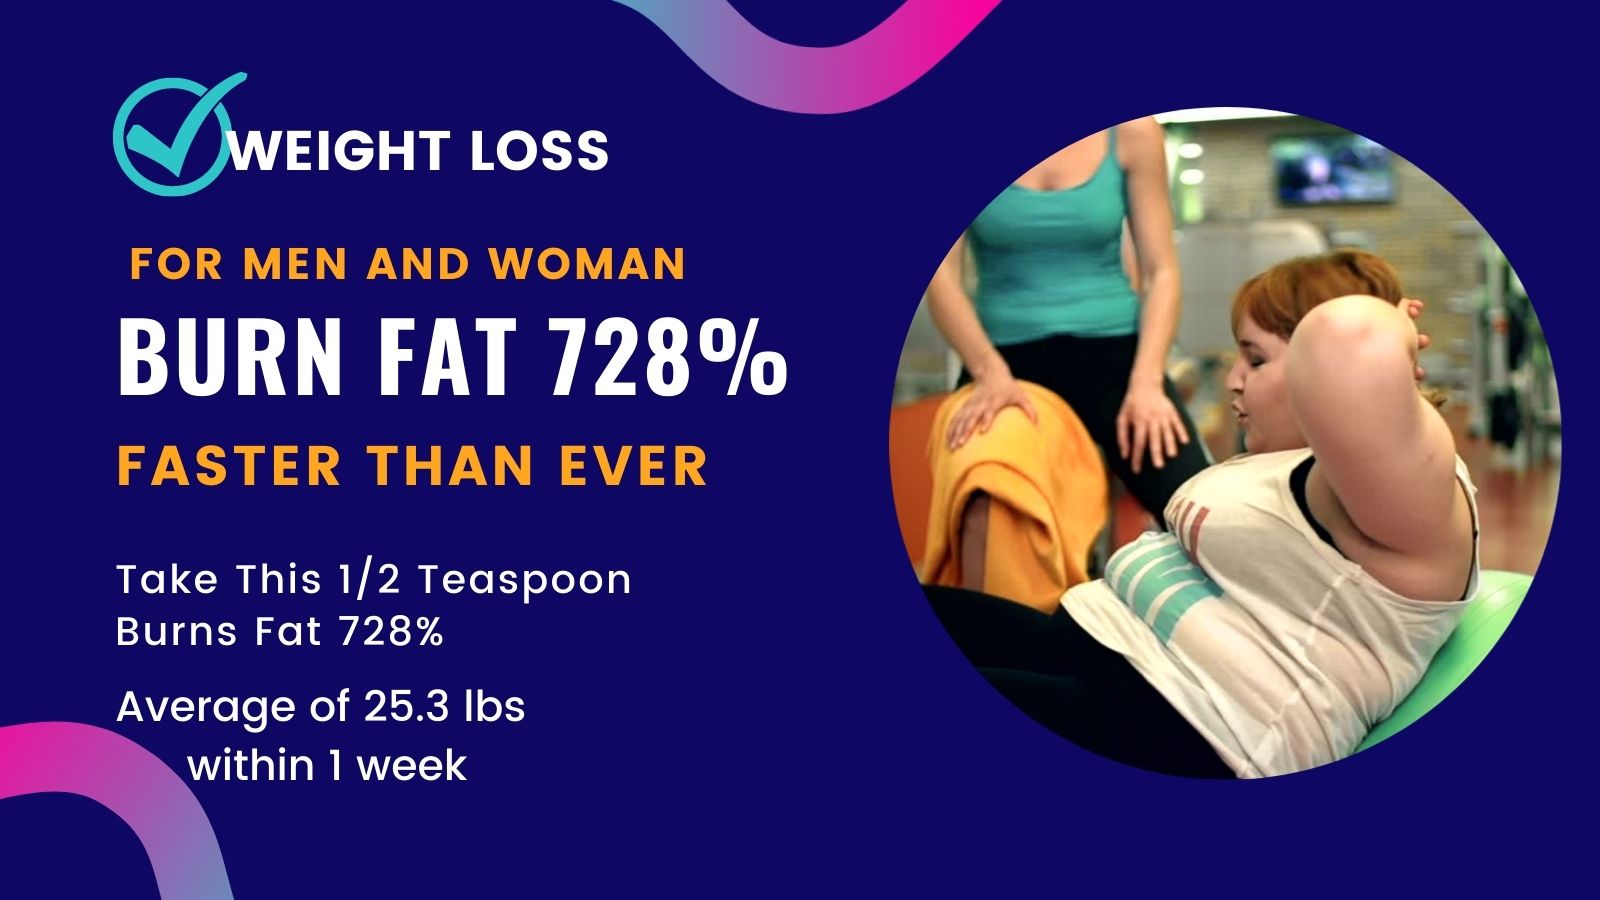 Weight Loss Take 1/2 Teaspoon Burn Fat 728% Faster Burn Belly Fat